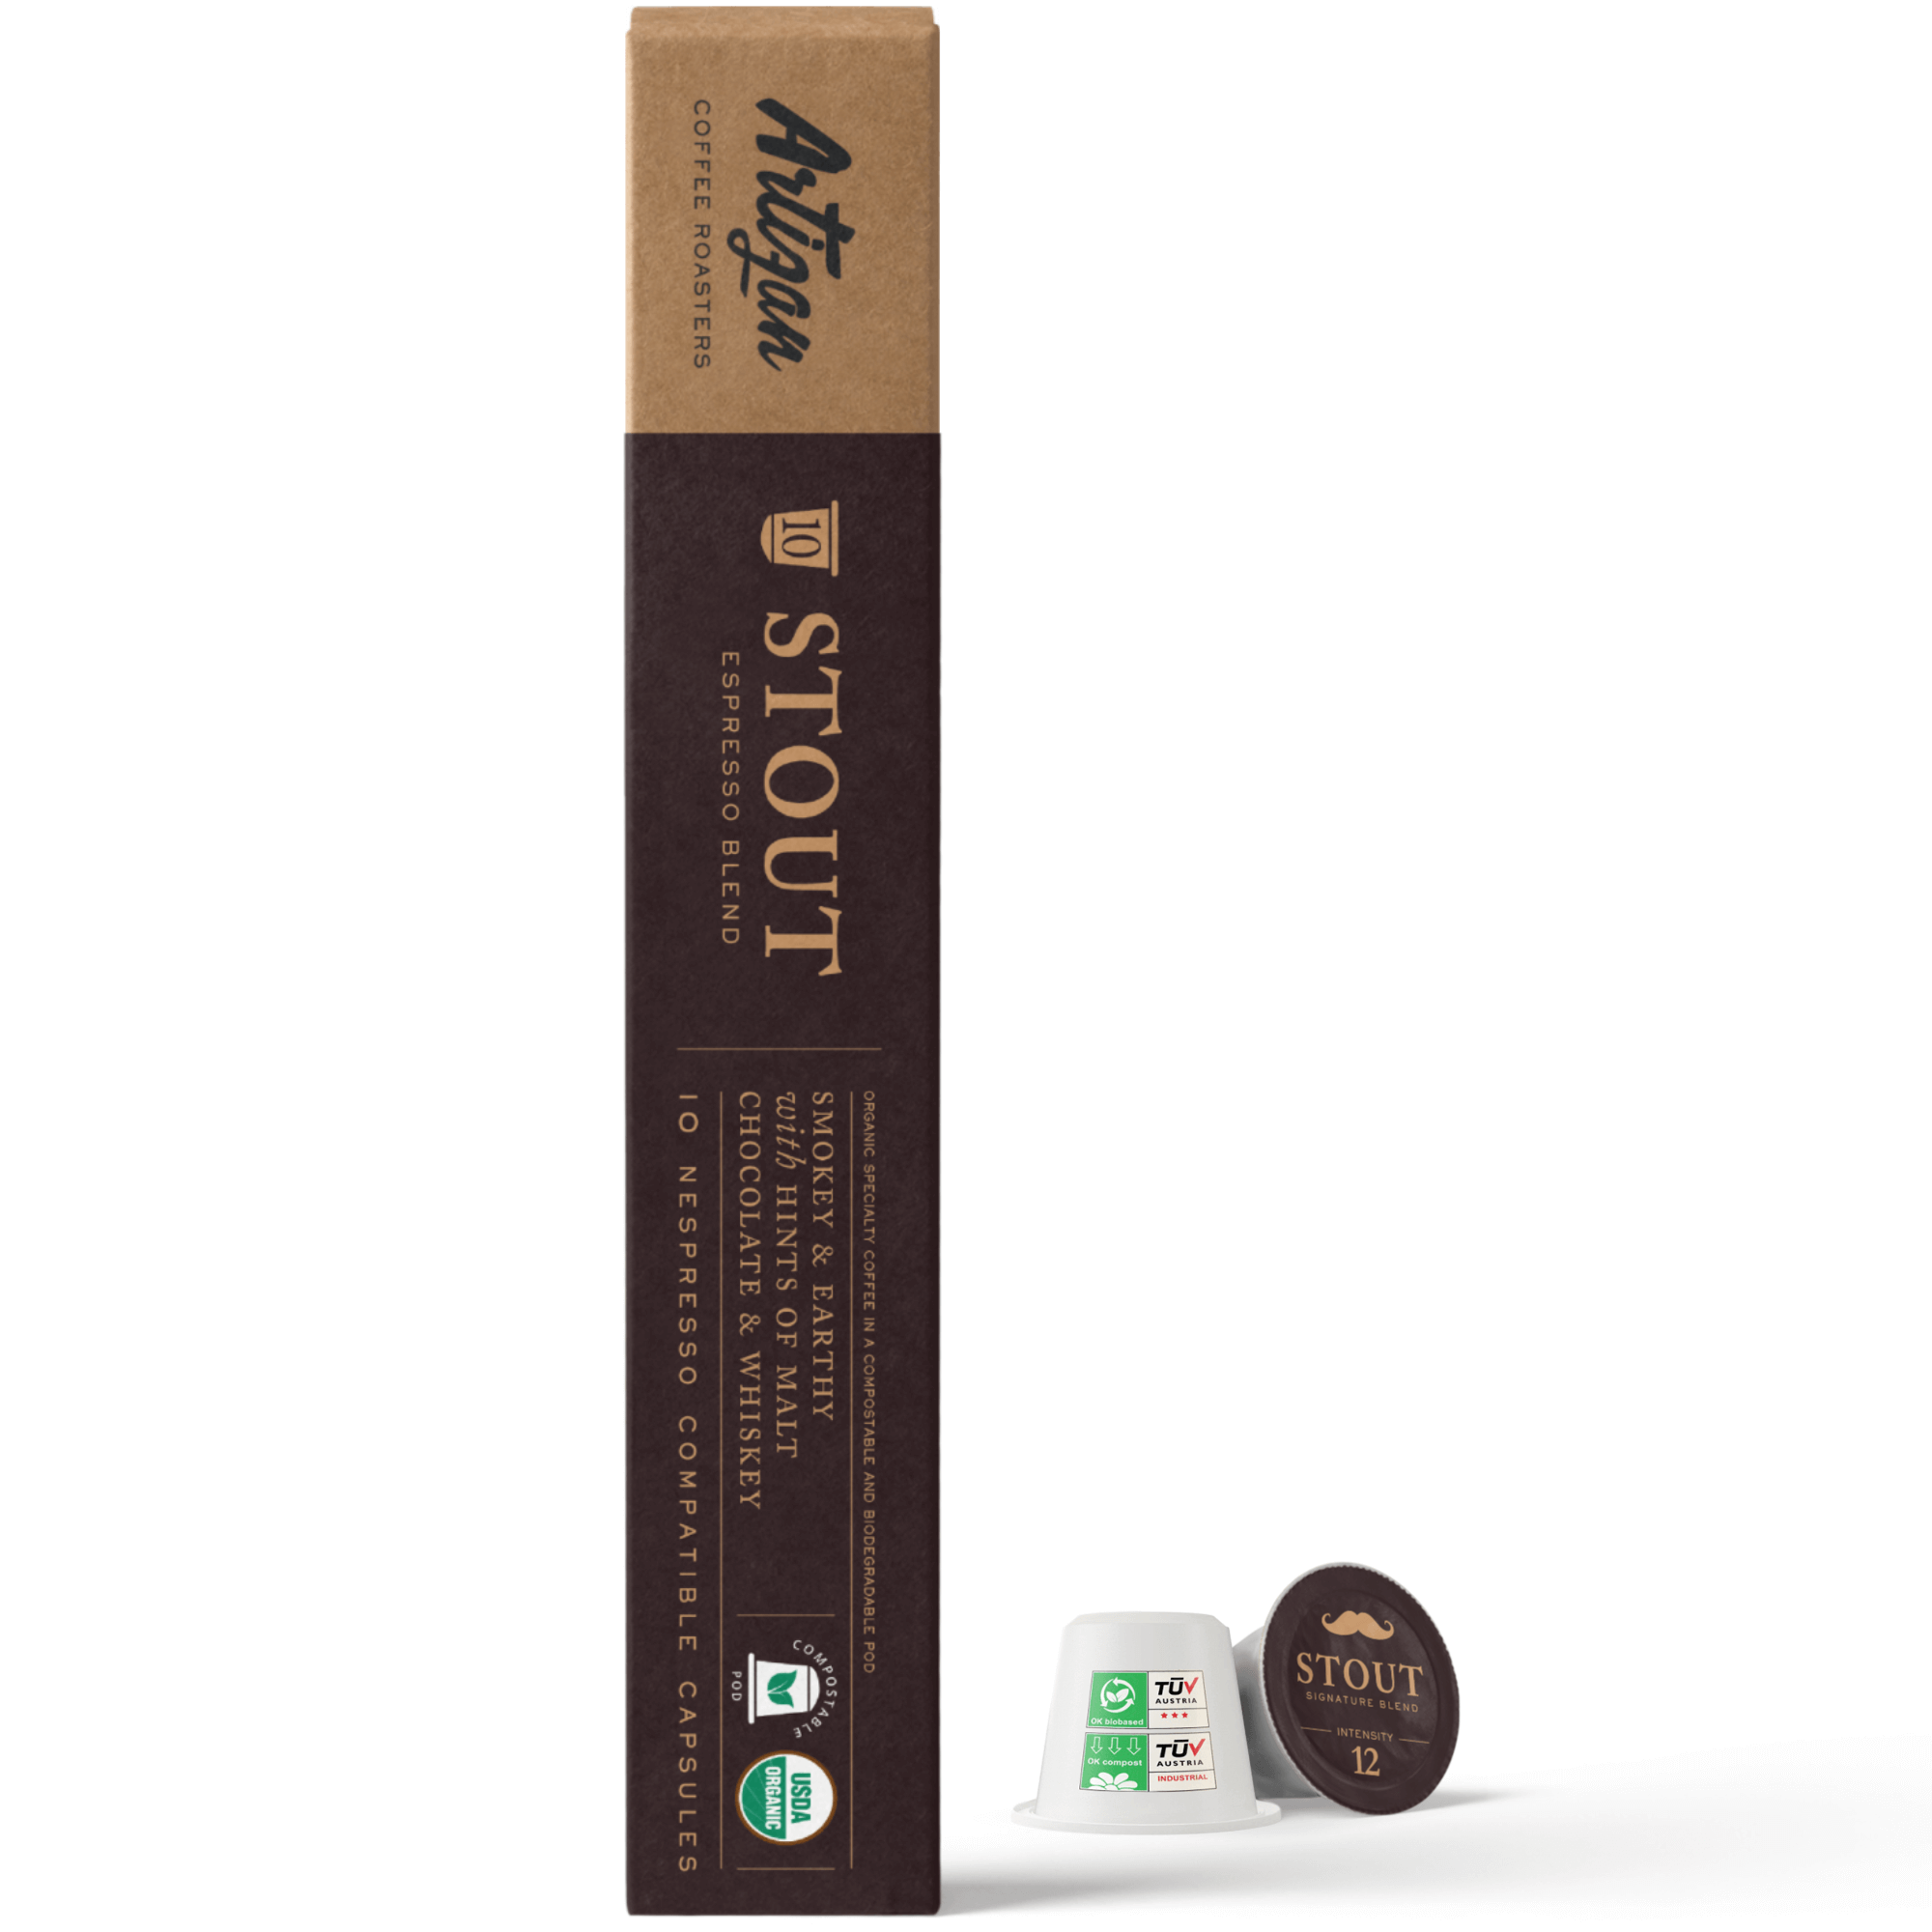 Artisan Electric Gooseneck Kettle Iridescent Unicorn — Organic Nespresso  Pods & Capsules - USDA Certified - Artizan Coffee